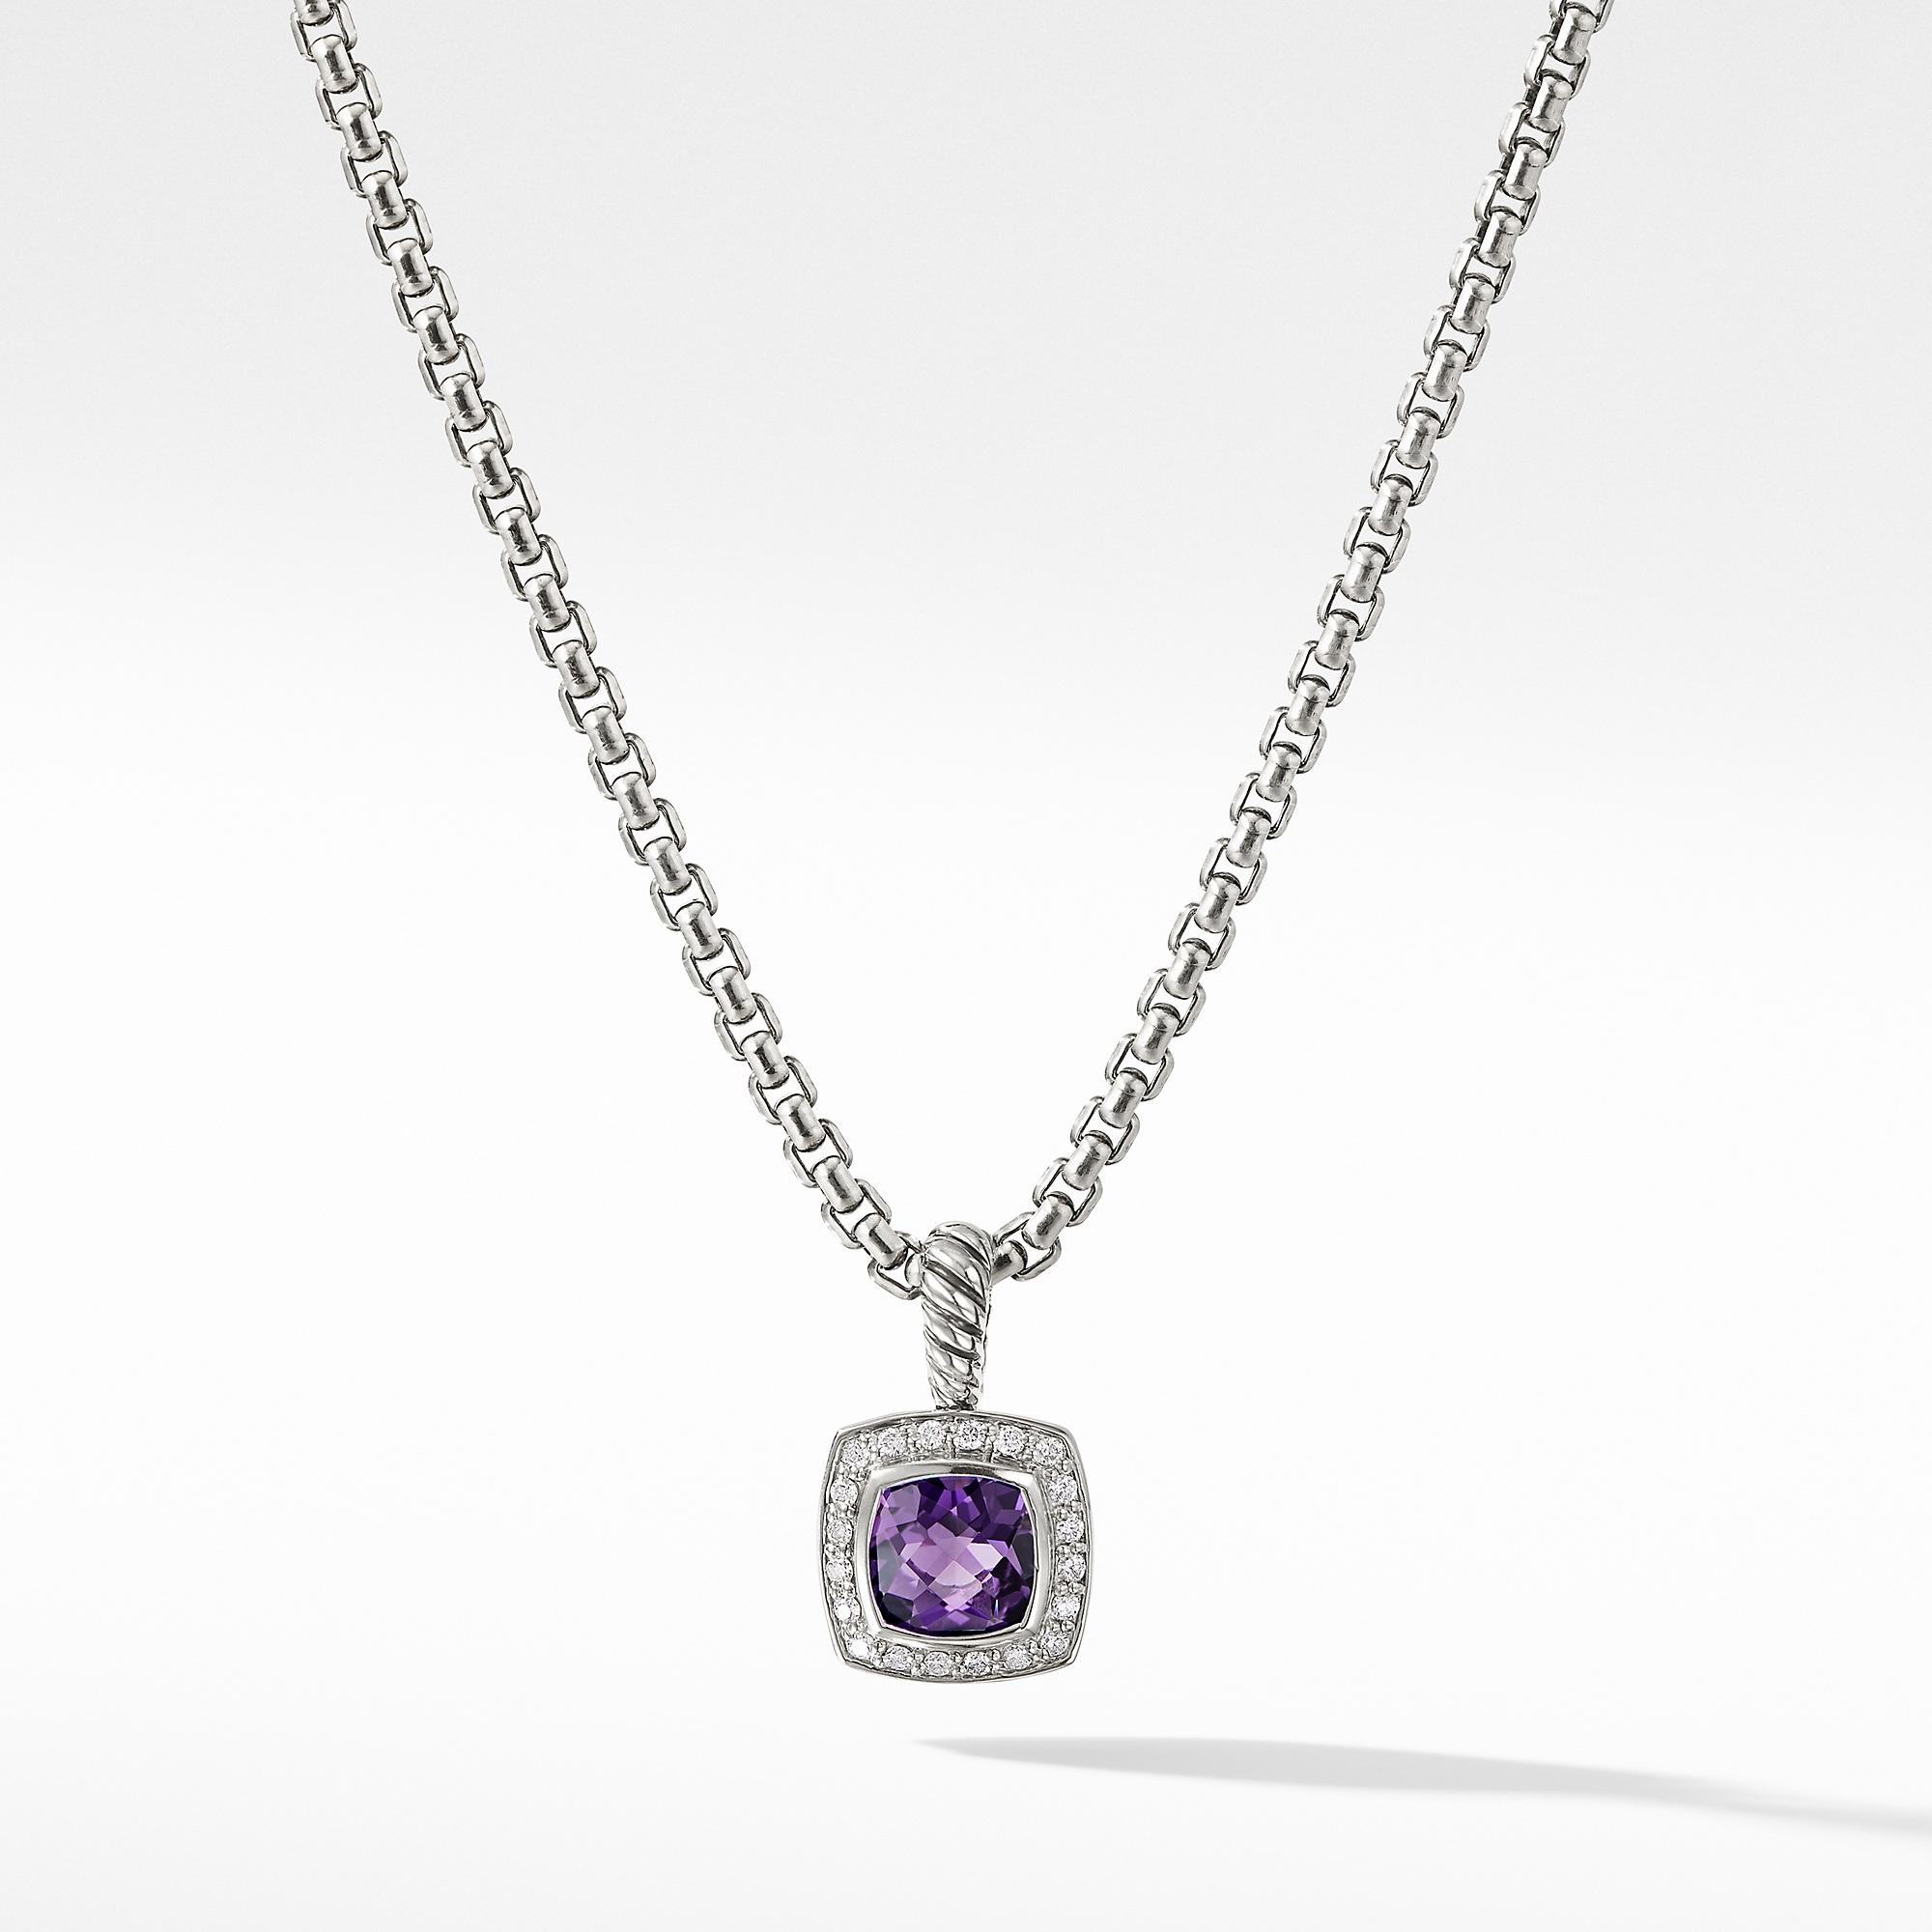 David Yurman Pendant Necklace with Amethyst and Diamonds